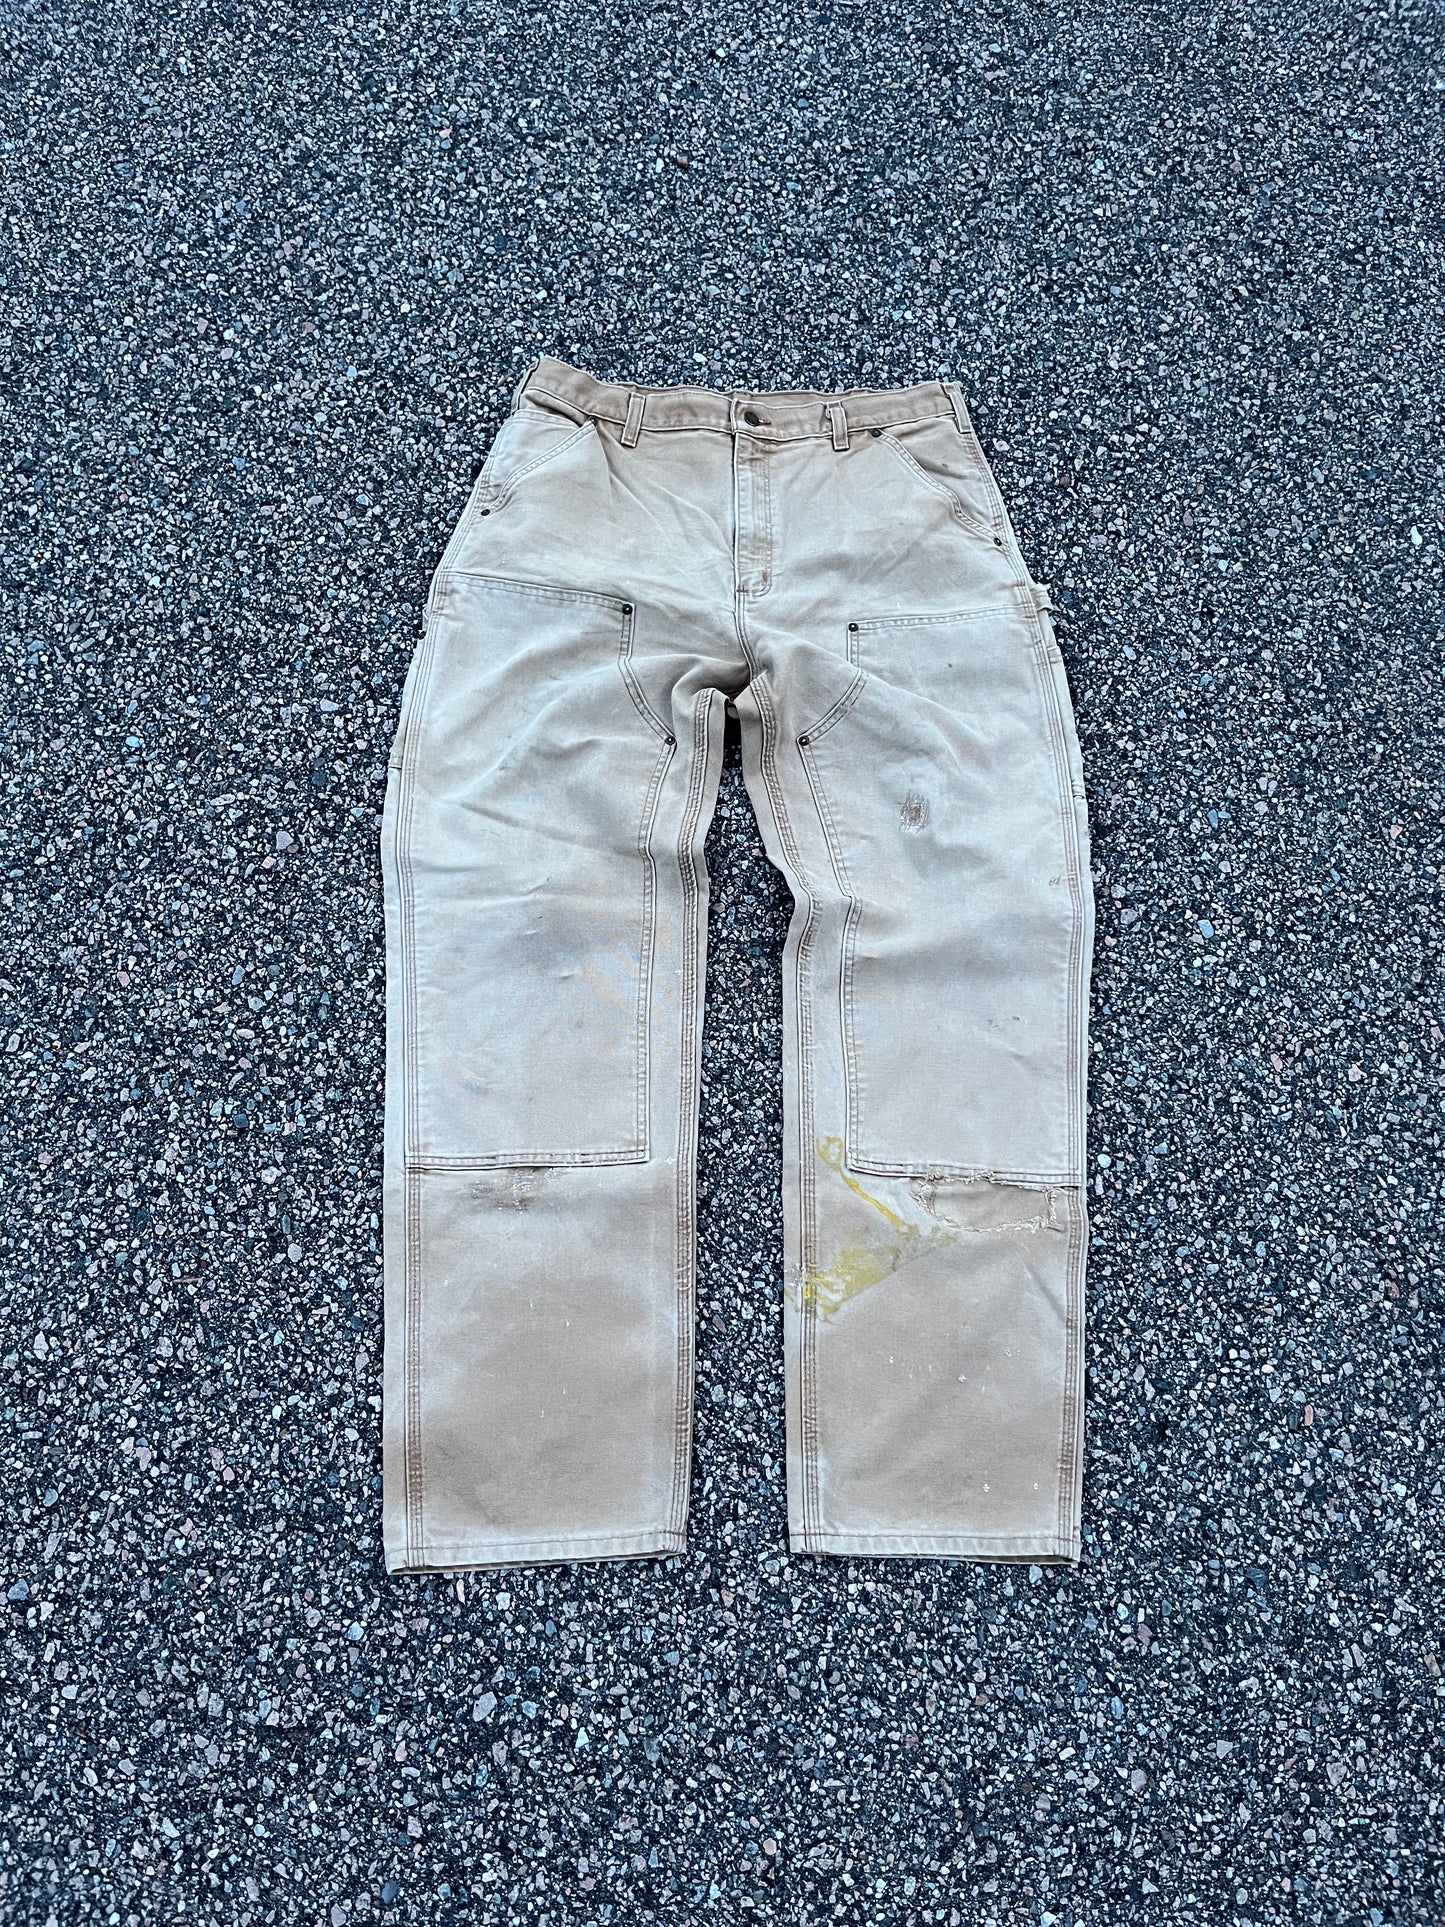 Faded Tan Carhartt Double Knee Pants - 34 x 32